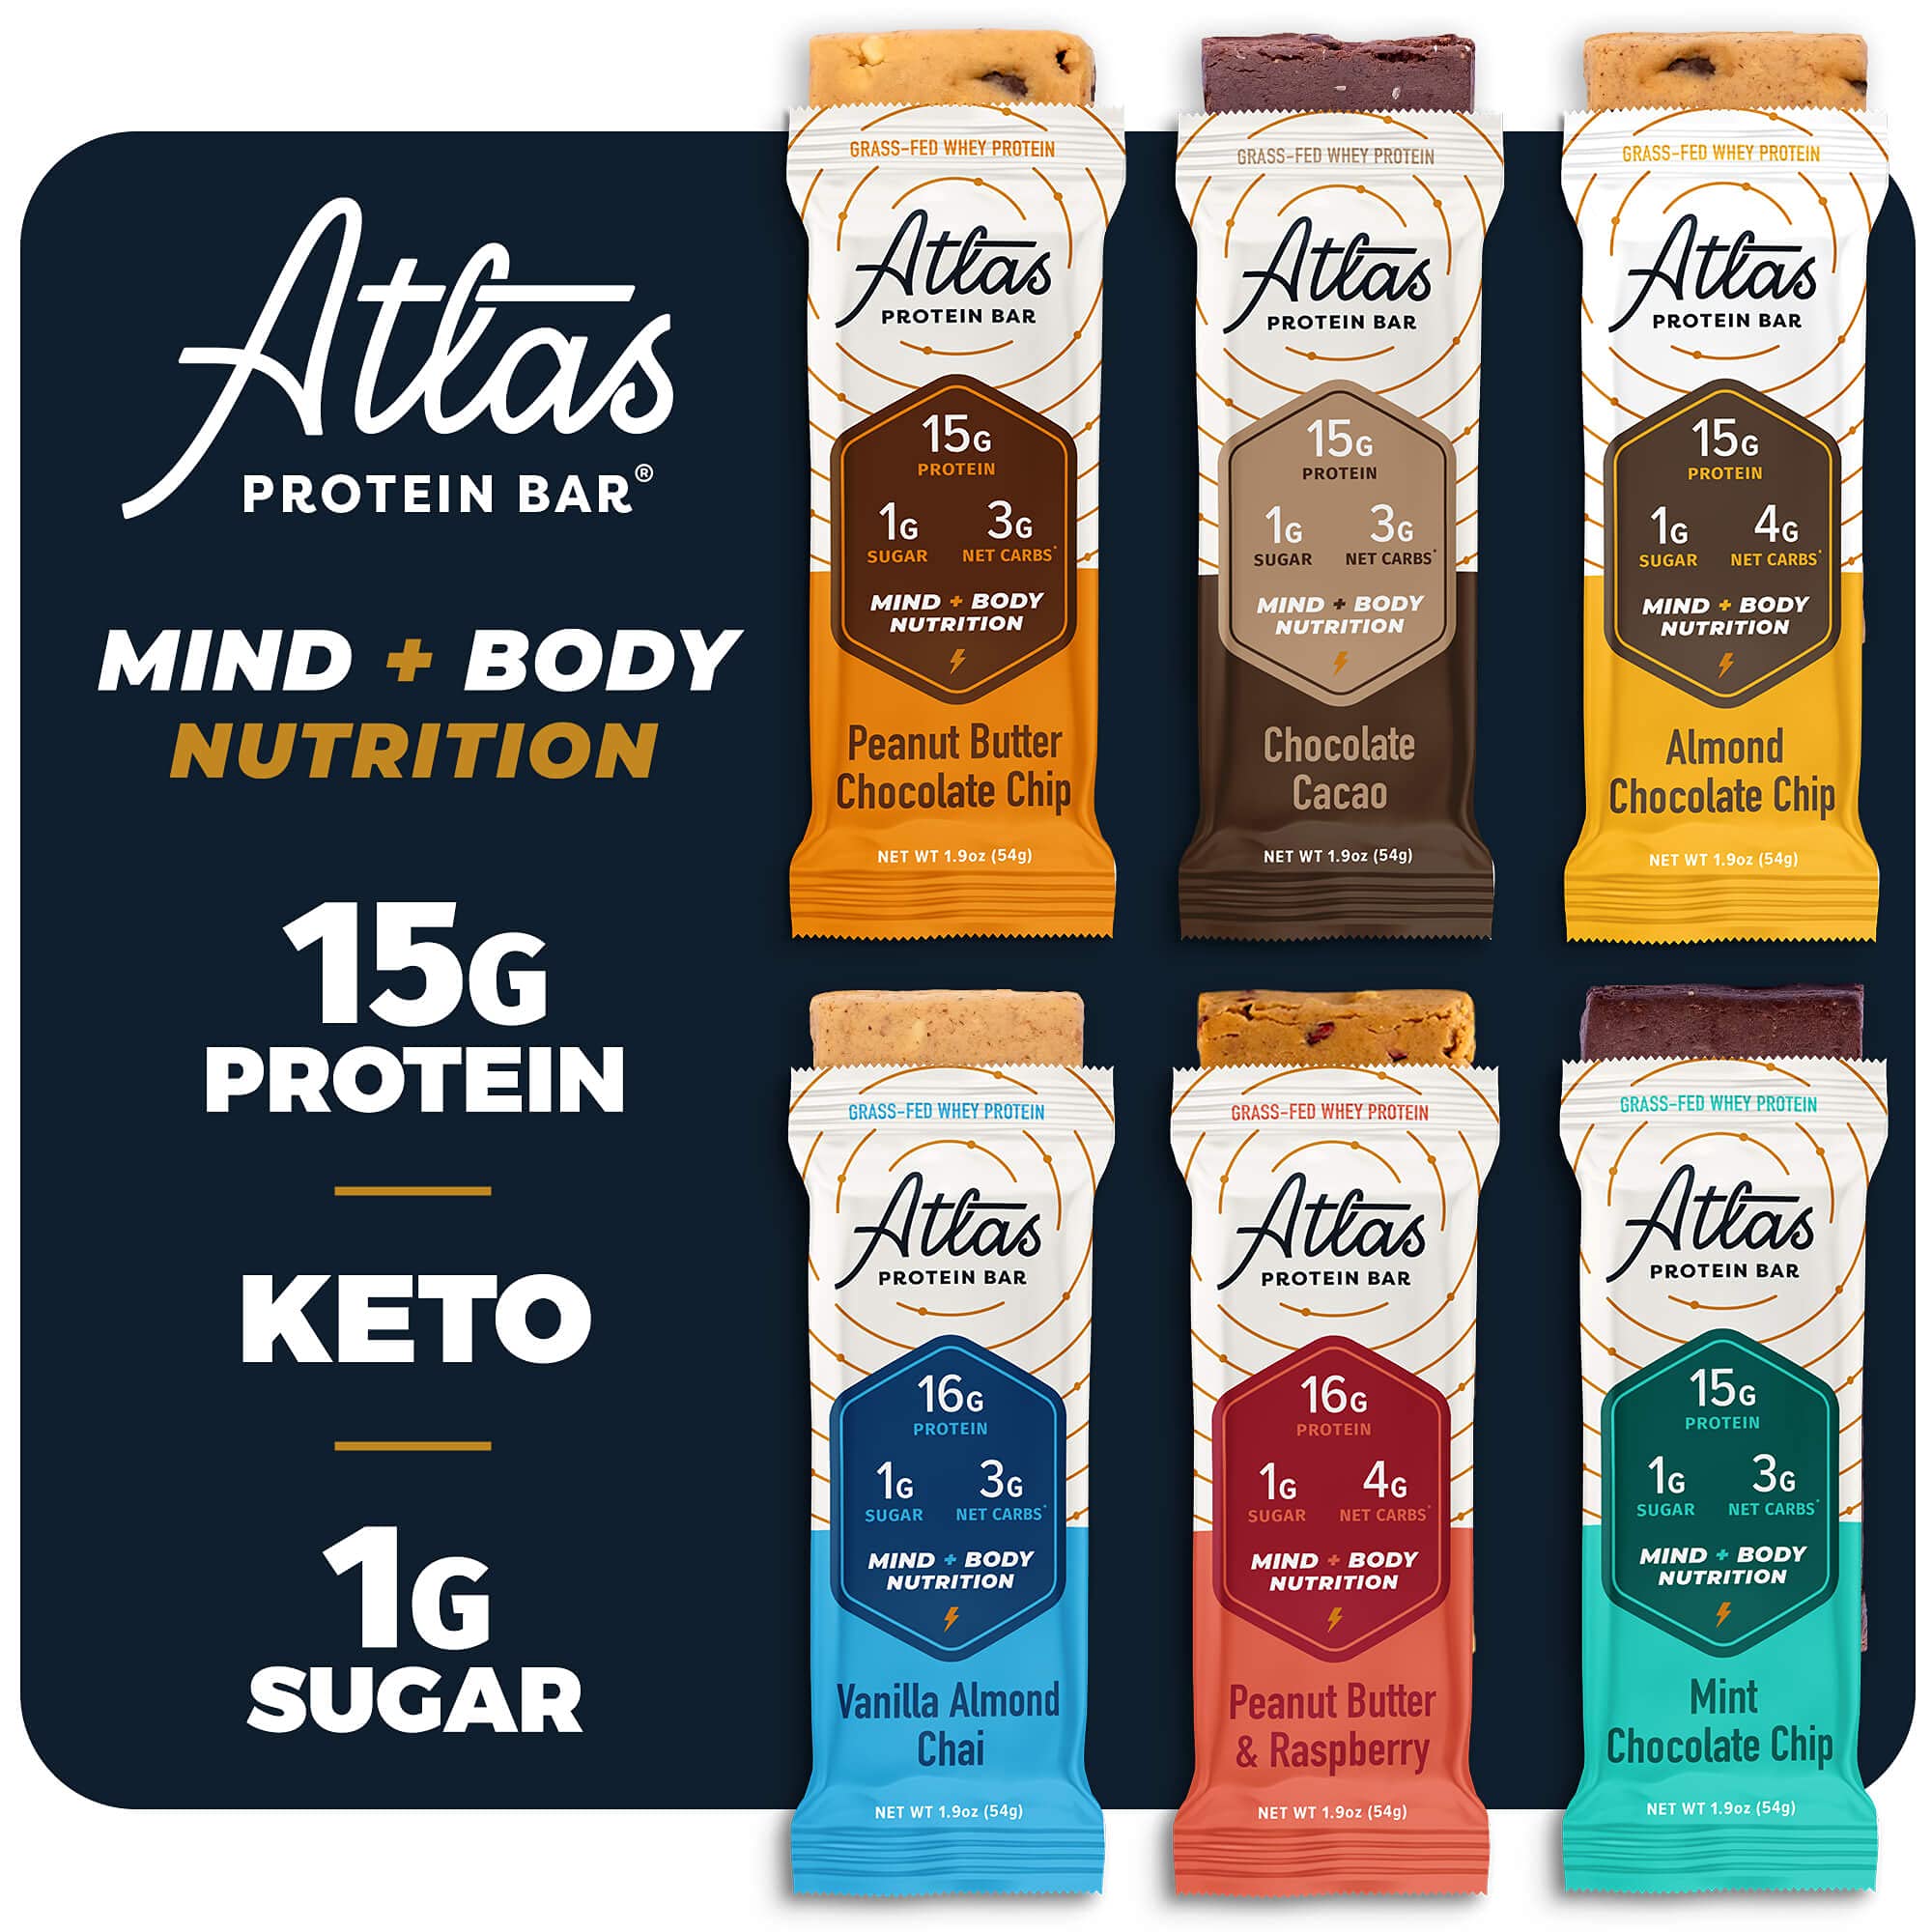 Atlas Protein Bar, 15g Protein, 1g Sugar, Clean Ingredients, Gluten Free, Value Pack (30 Count, 6 Flavors)